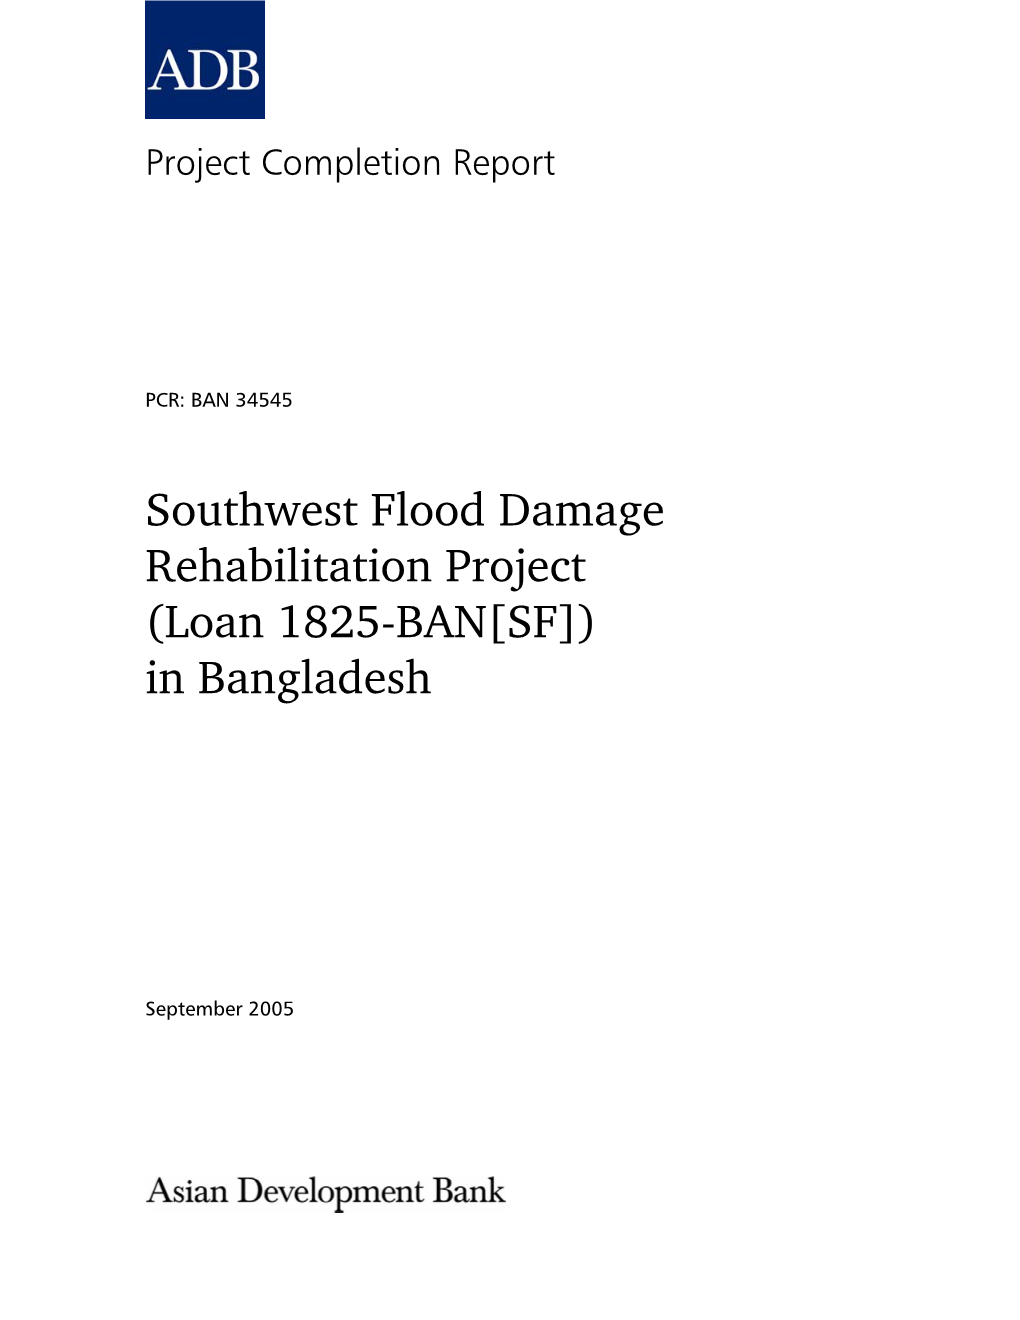 Southwest Flood Damage Rehabilitation Project (Loan 1825-BAN[SF]) in Bangladesh